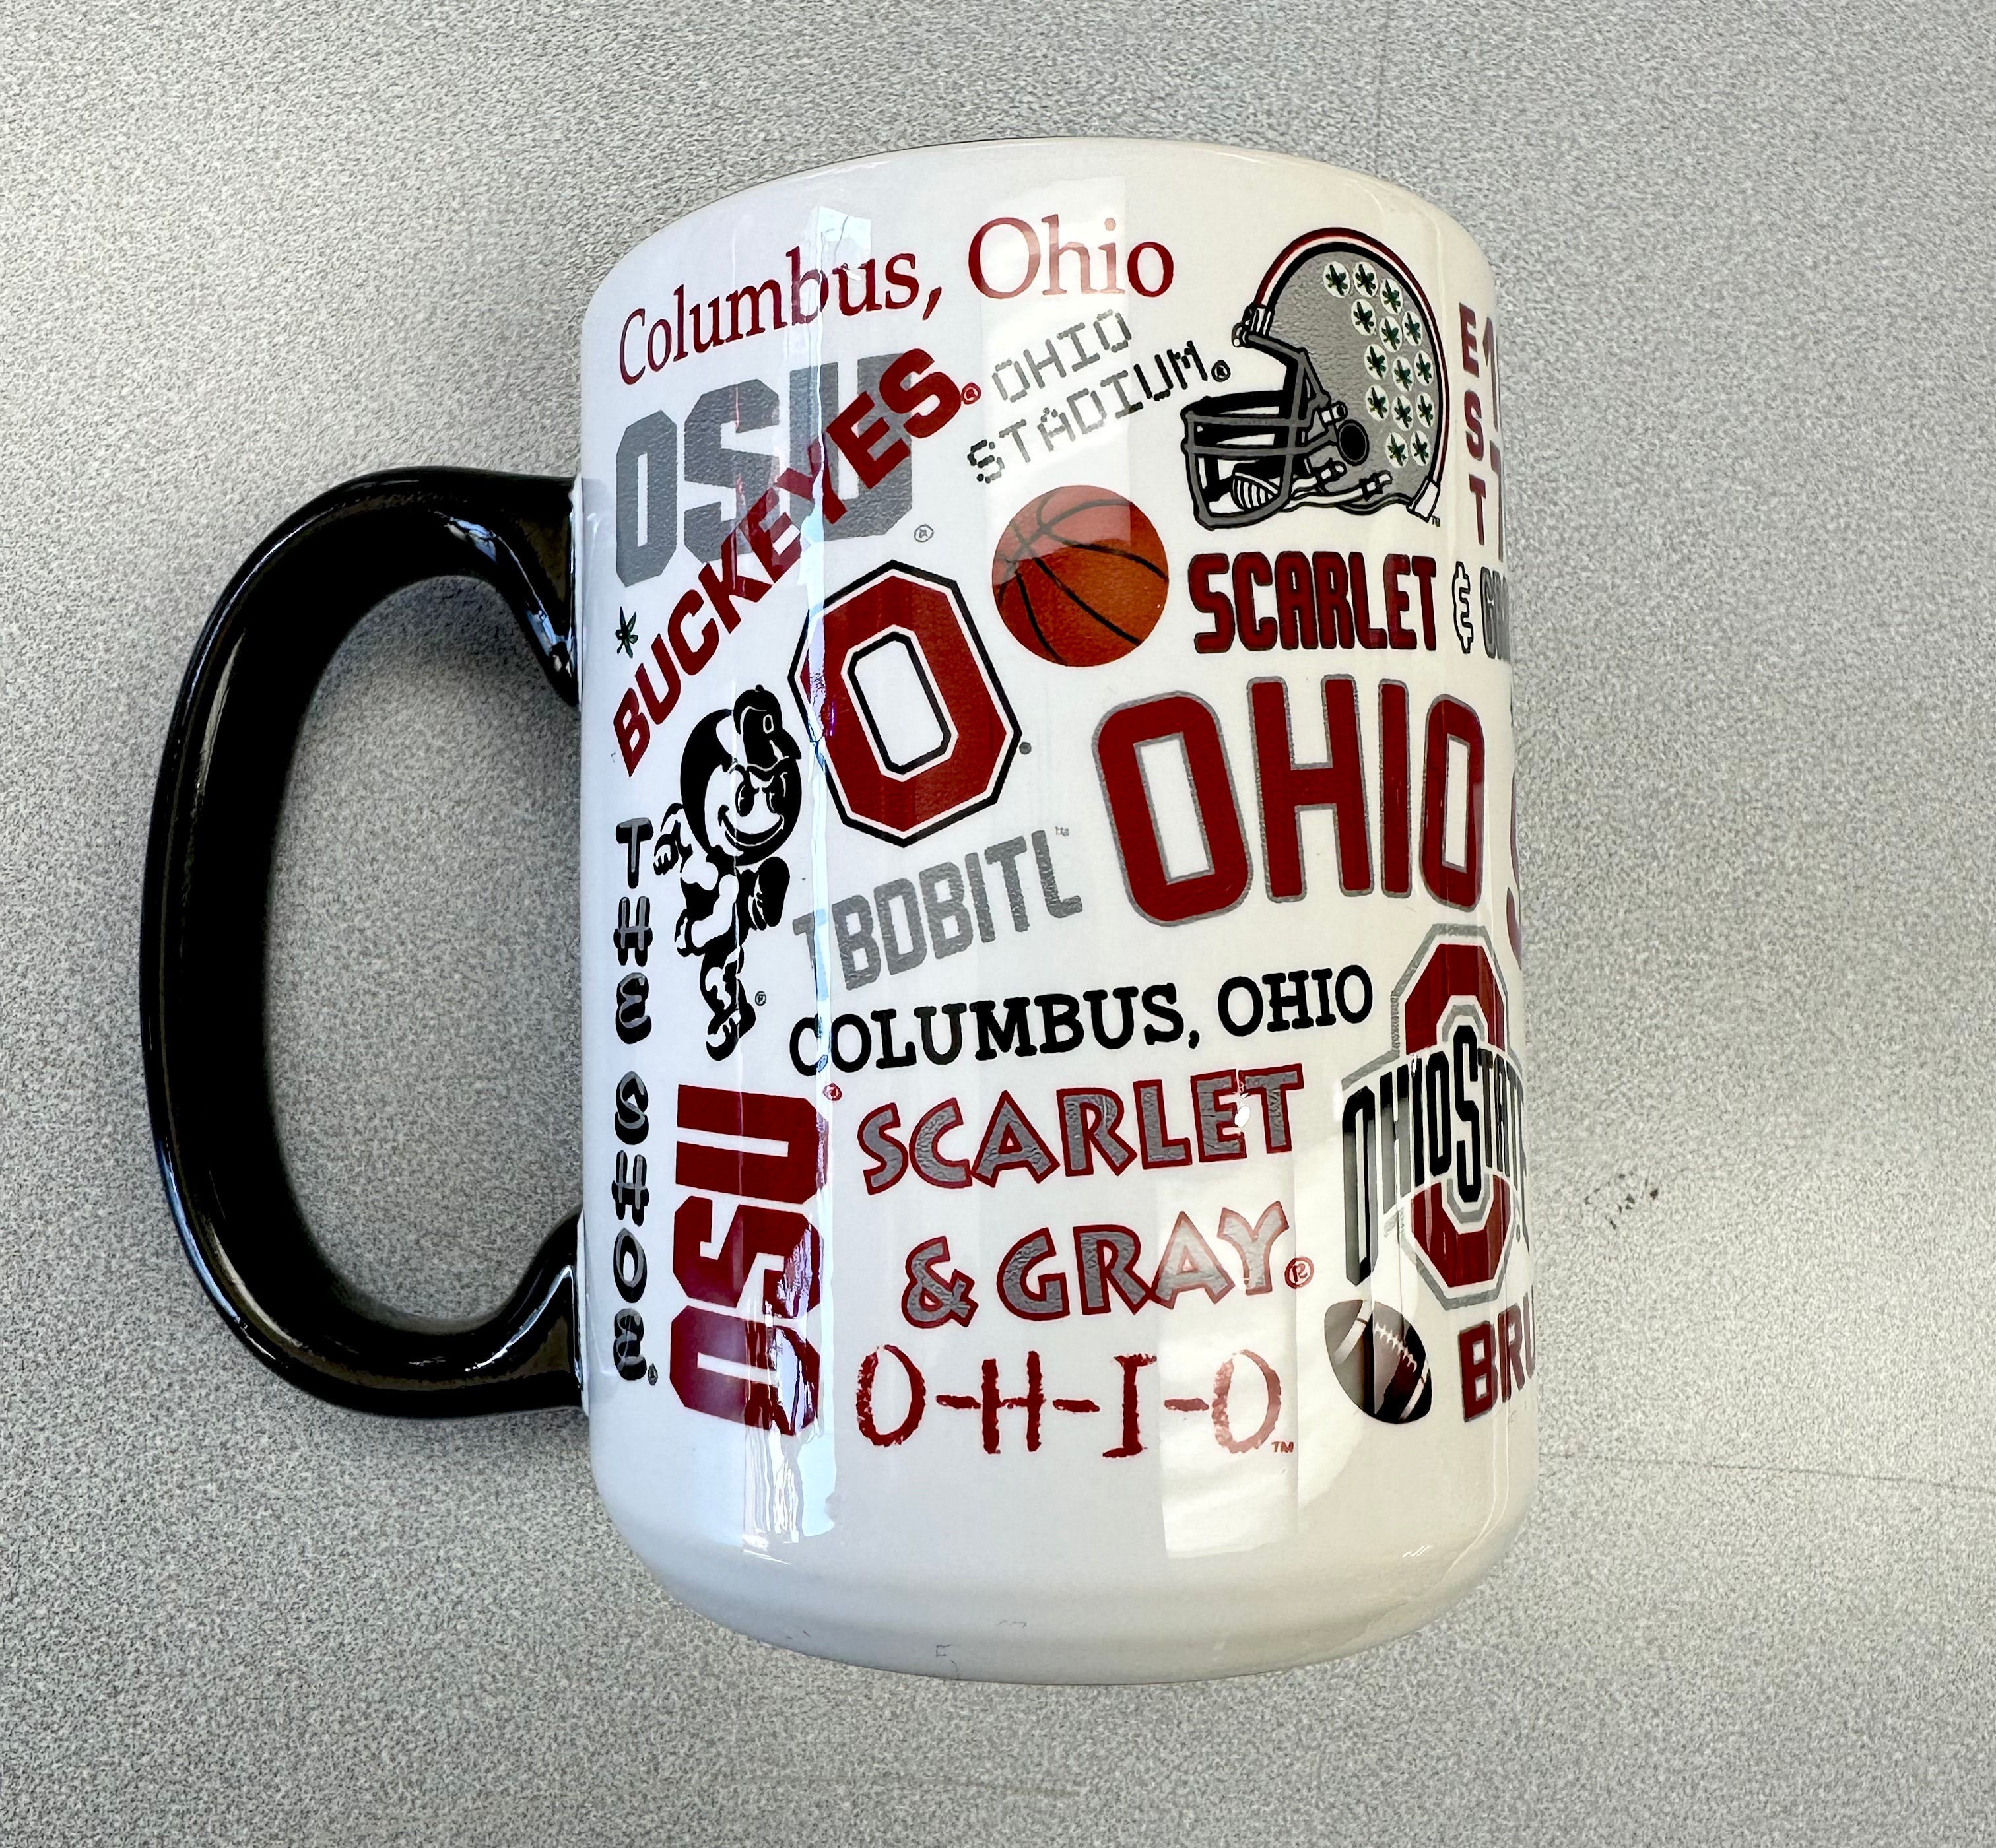 Ohio State Coffee Cups, Ohio State Mugs, Ohio State Buckeyes Pint